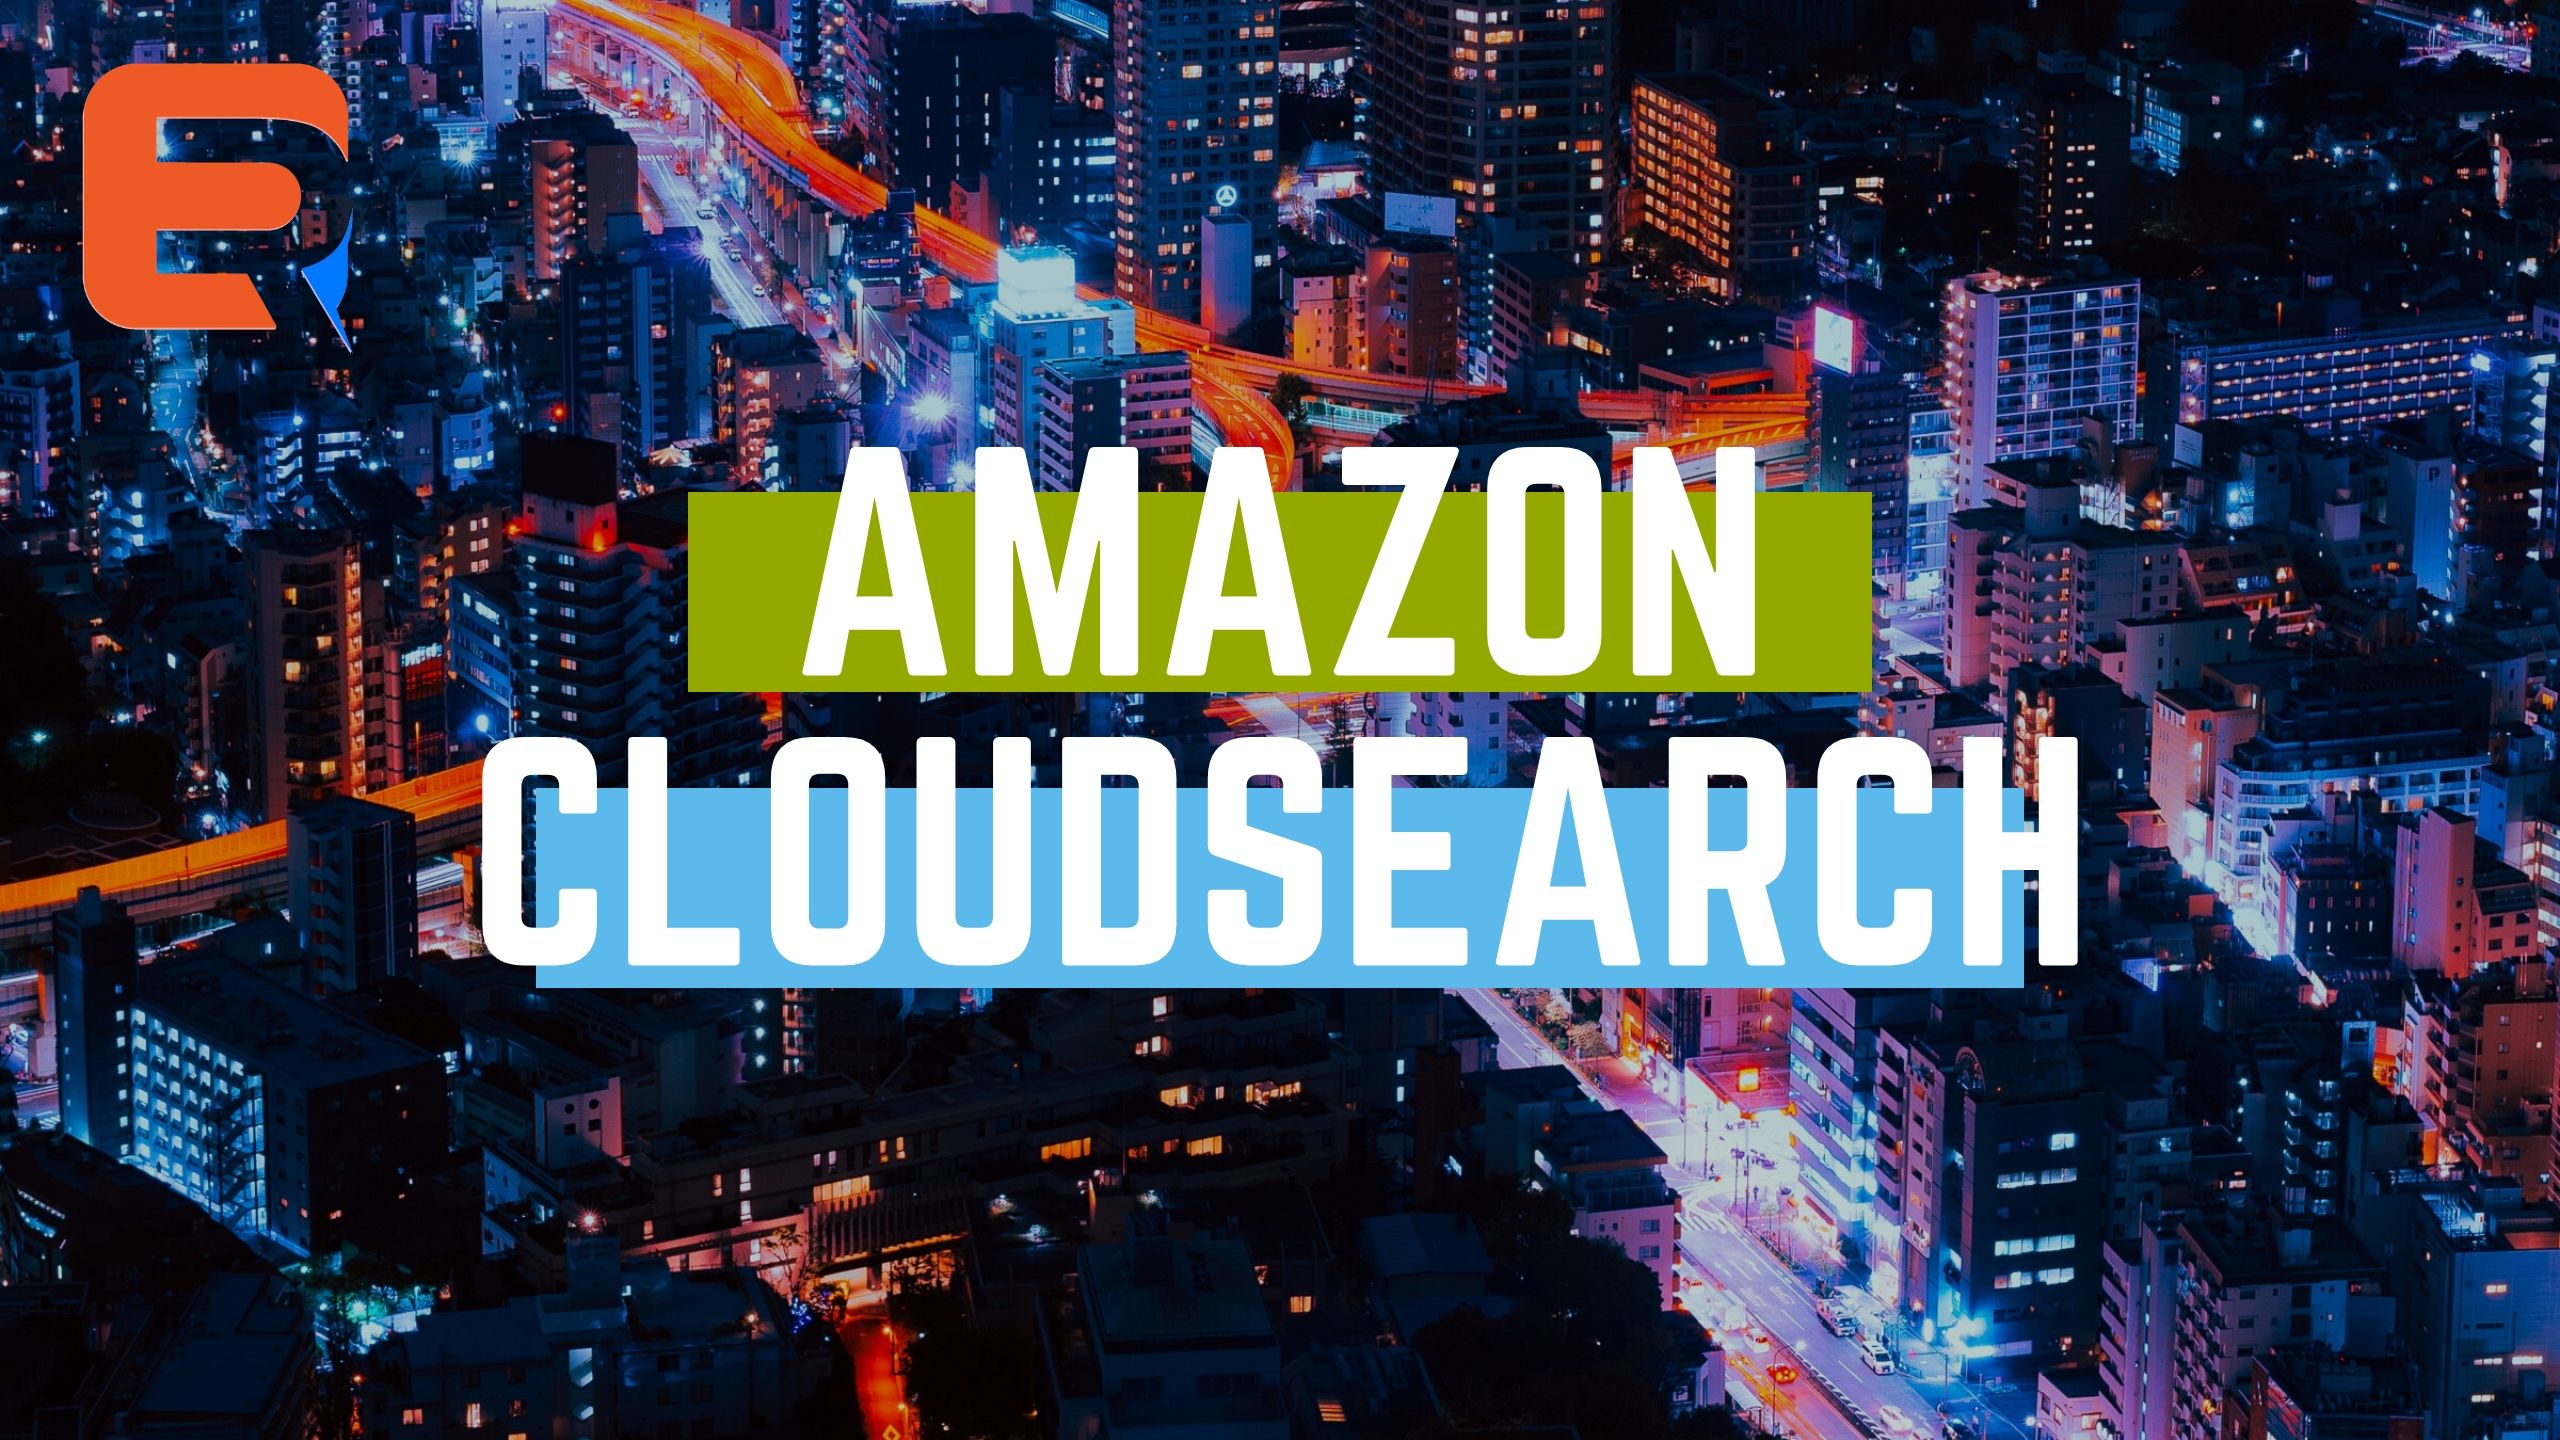 Amazon cloudsearch